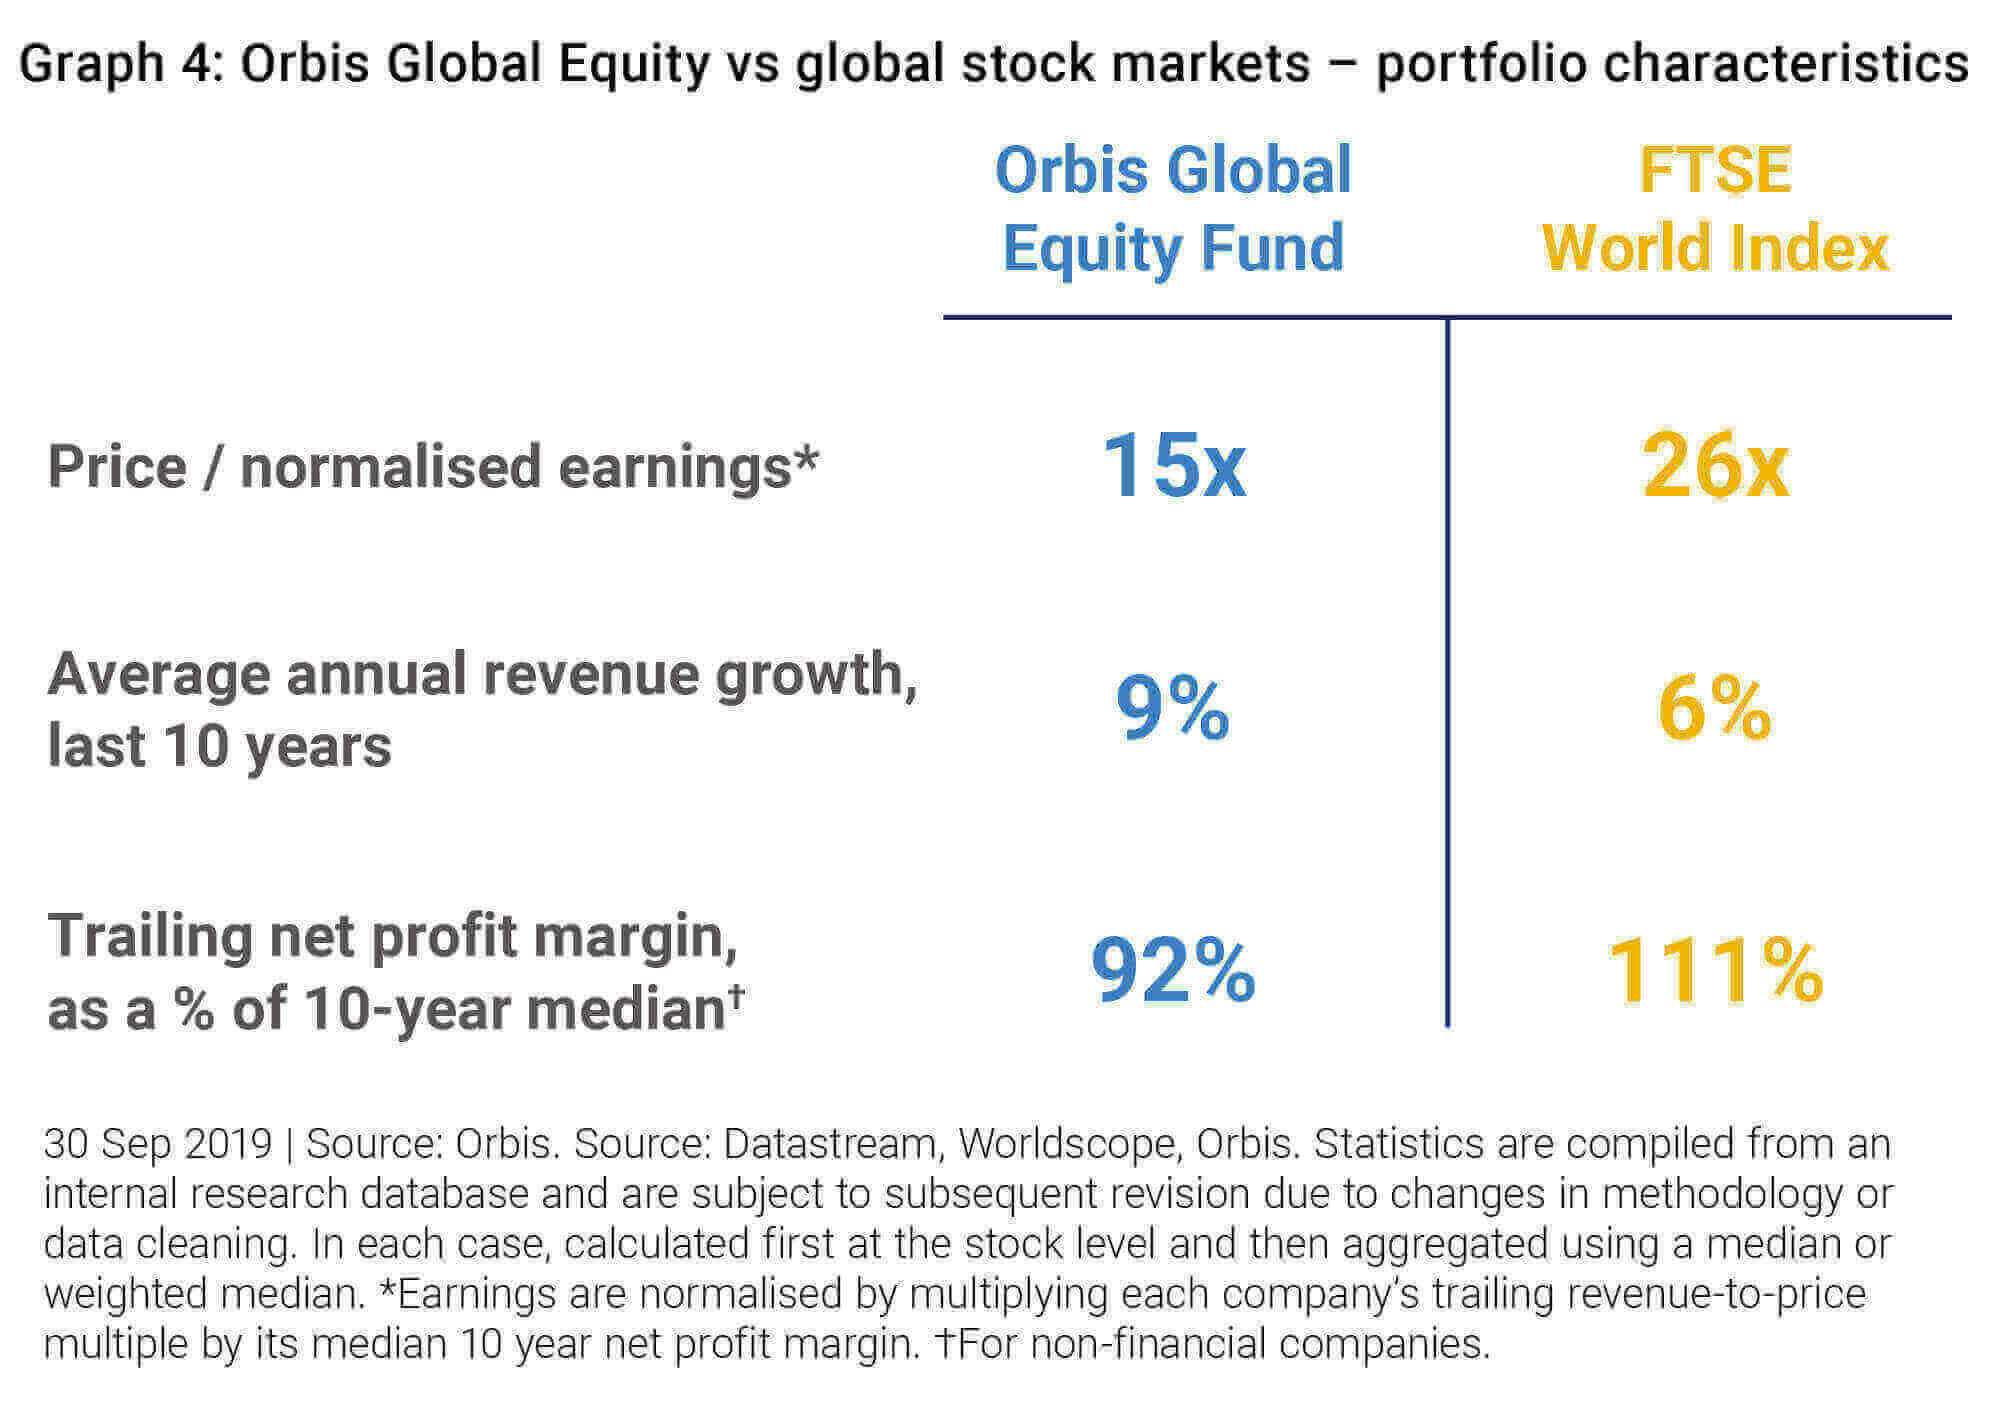 Orbis Global Equity vs global stock markets: Portfolio characteristics - Allan Gray